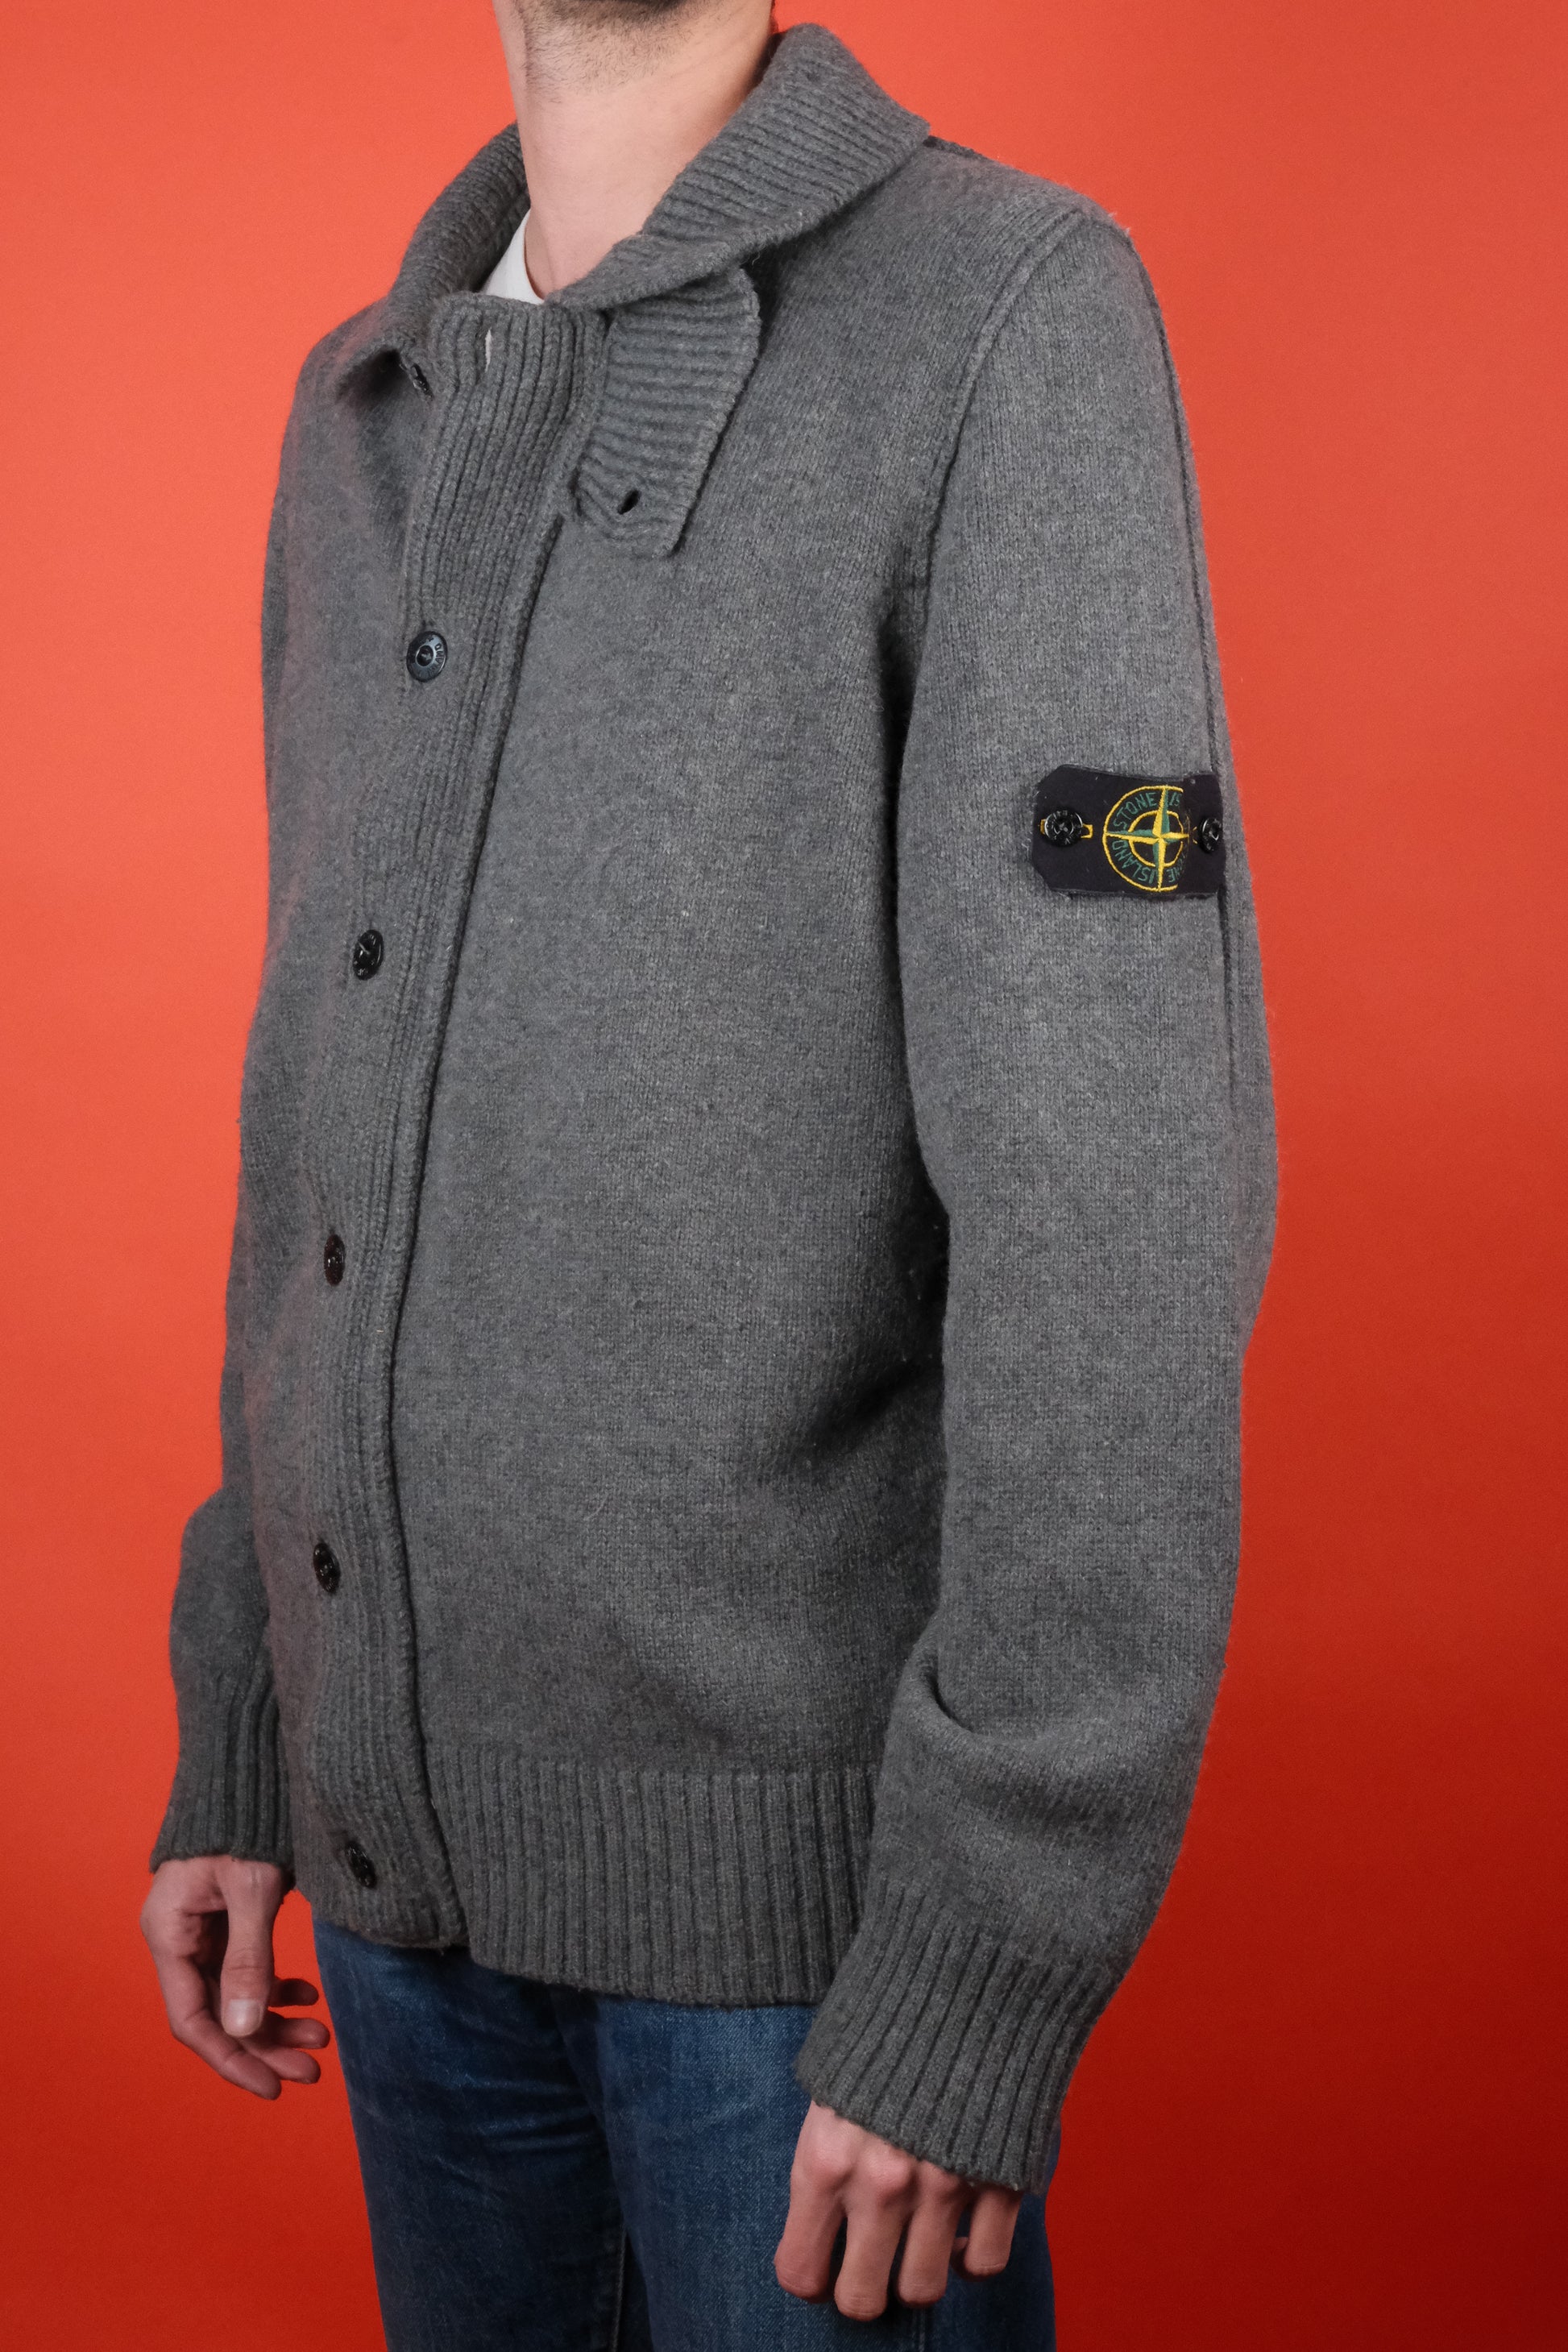 Stone Island Zip Sweater w/ Buttons 'XXL' - vintage clothing clochard92.com